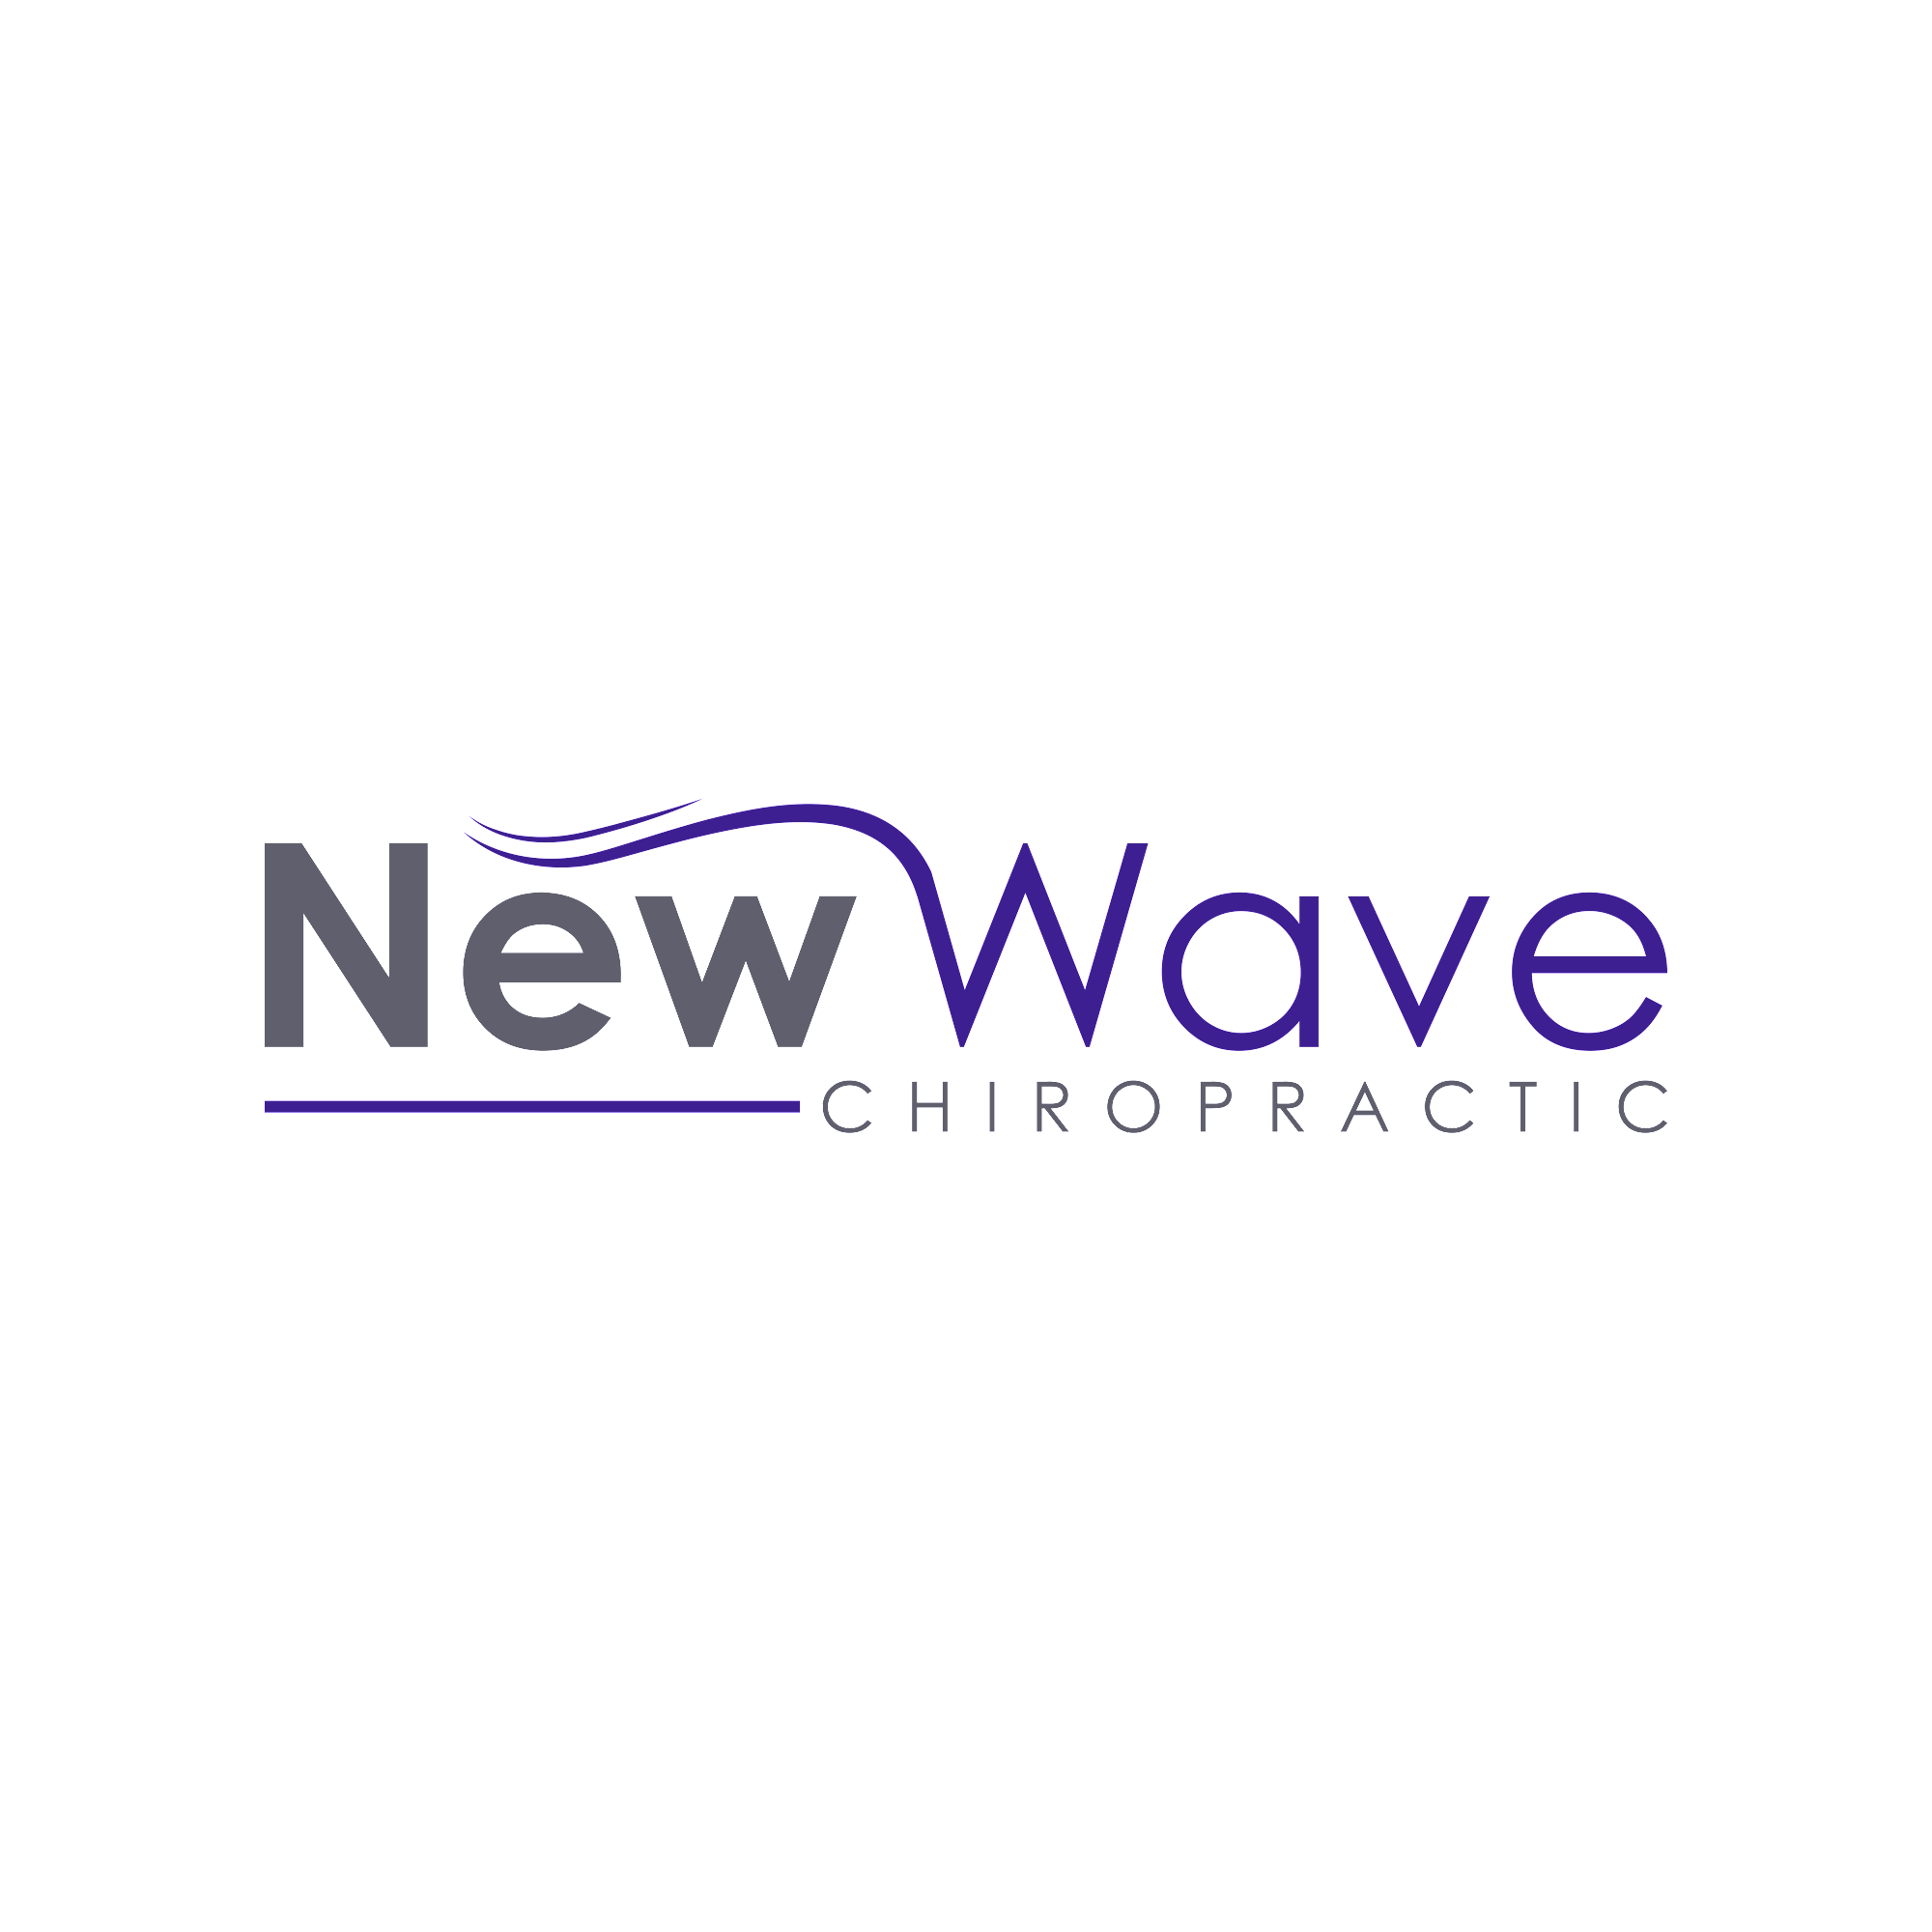 New Wave Chiropractic